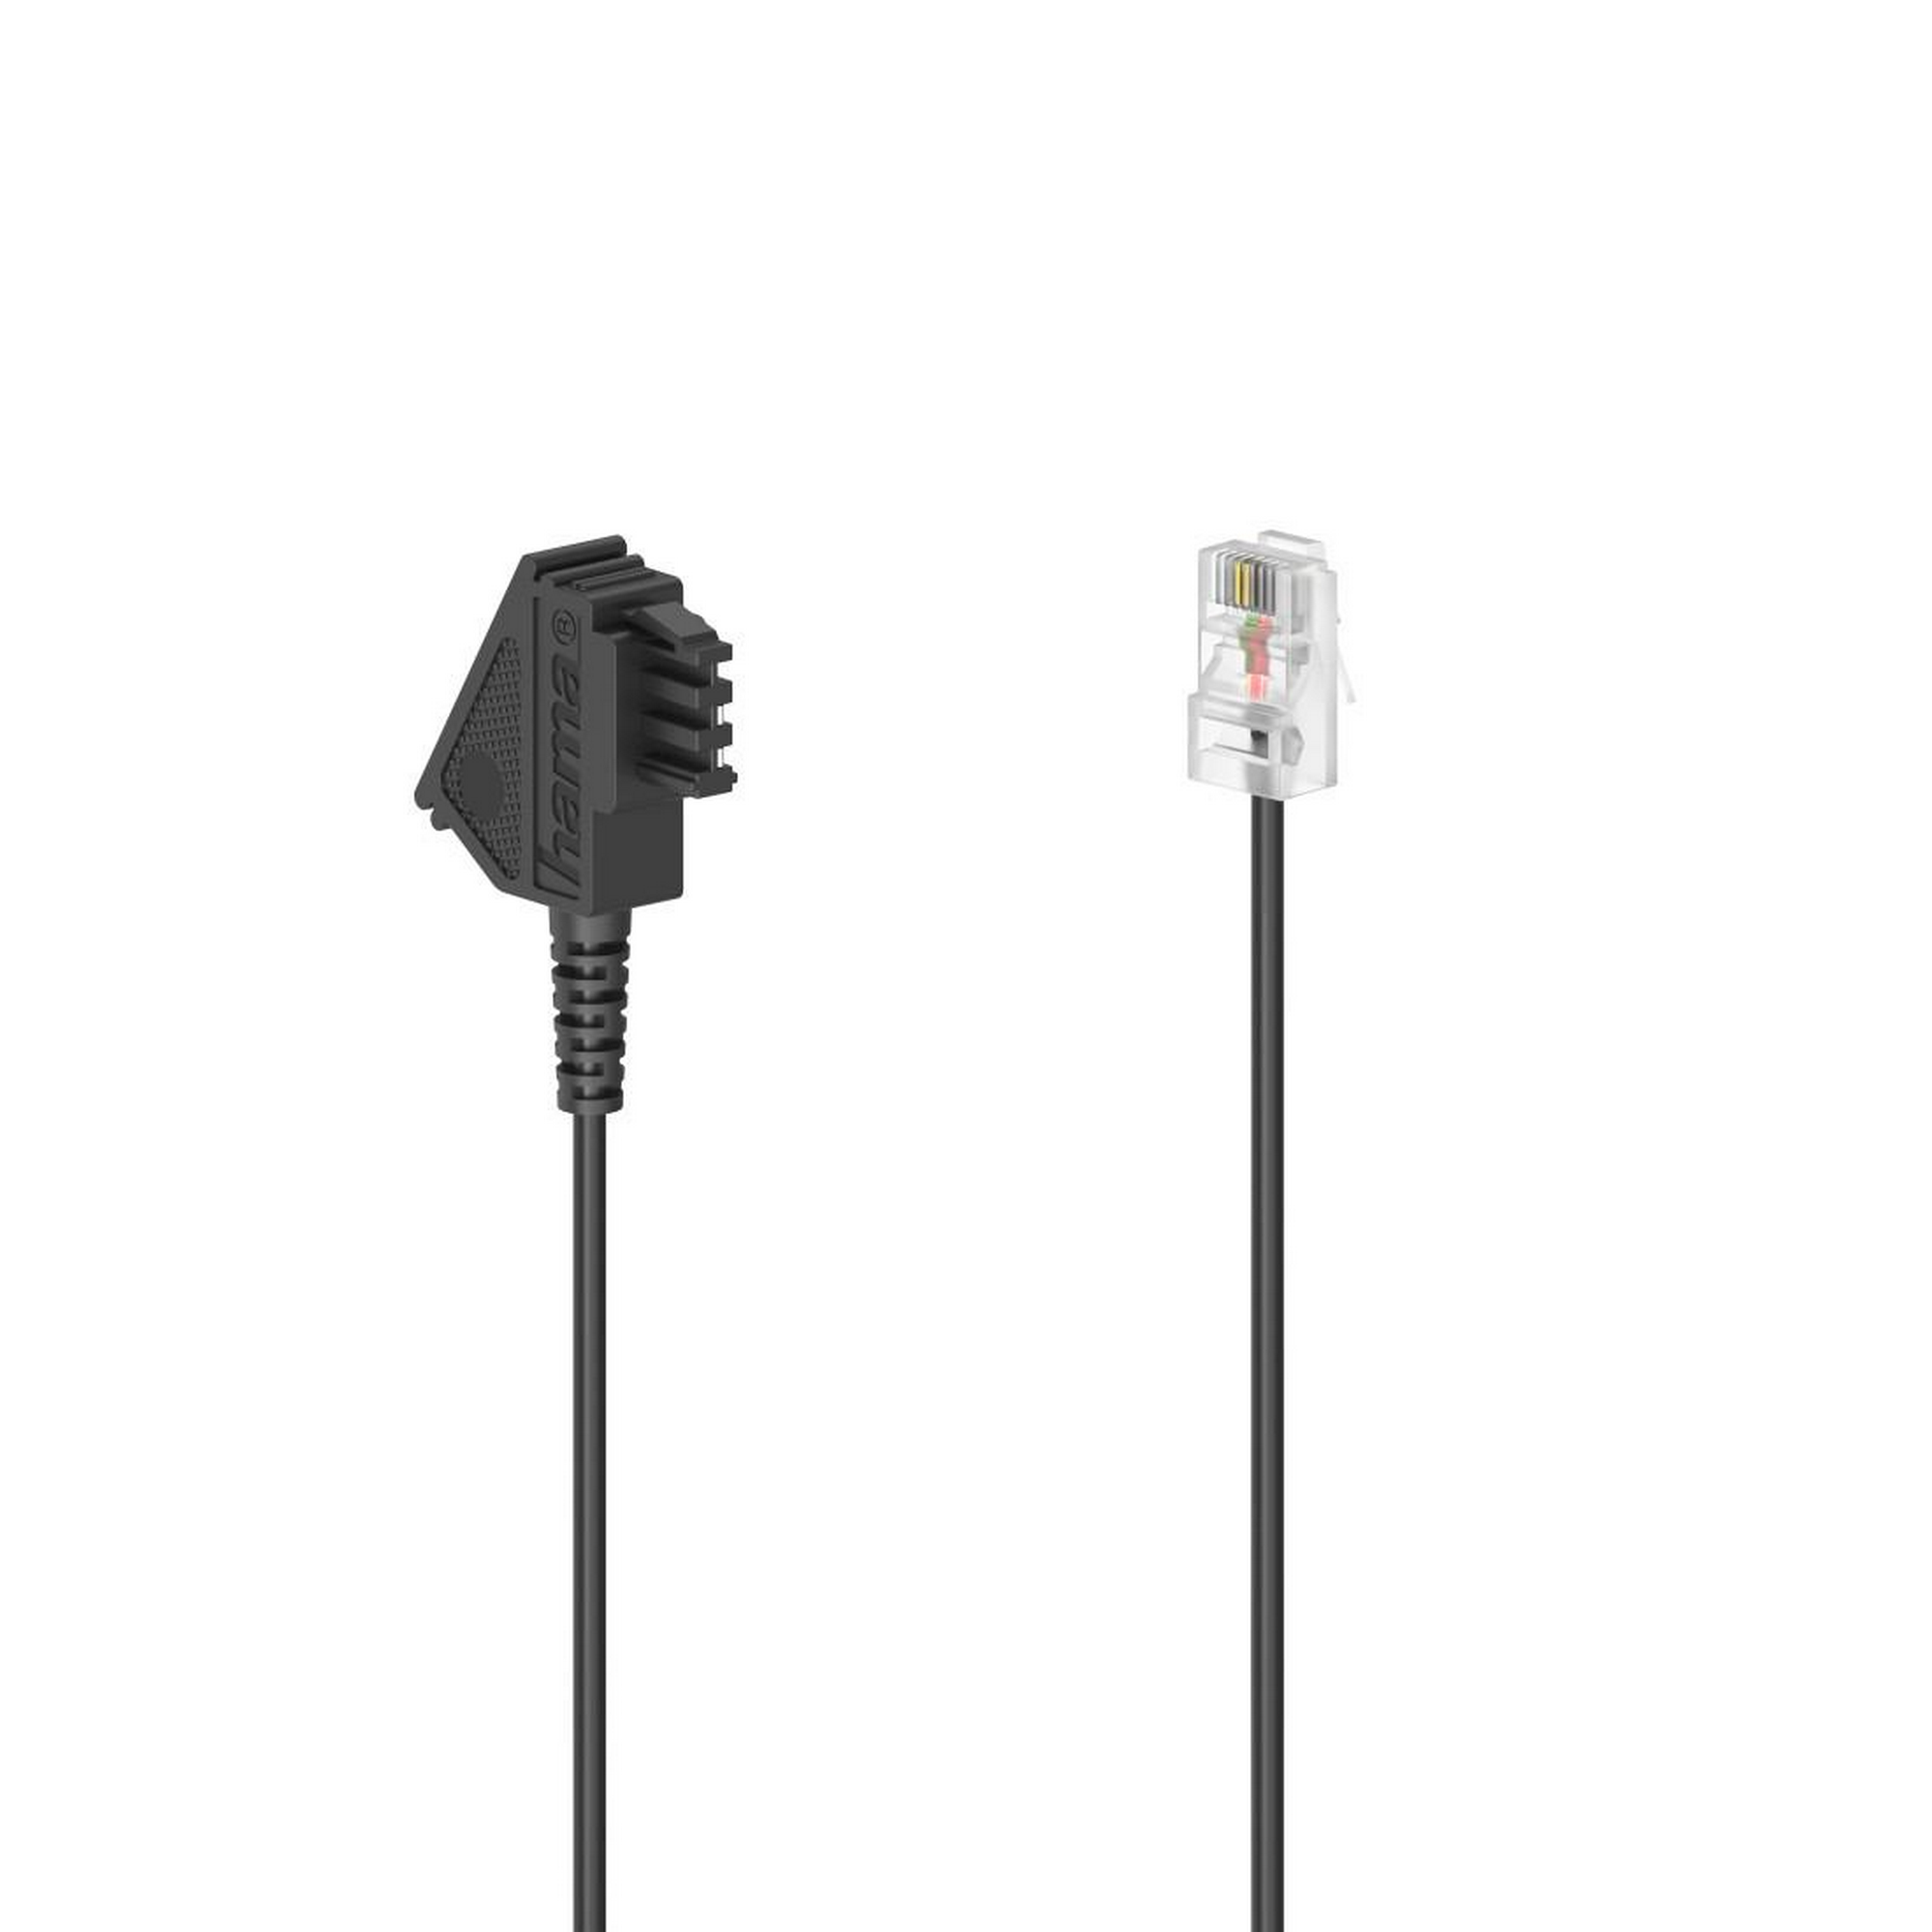 DSL-Box-Kabel schwarz TAE-F-Stecker mit Modular-Stecker 8p2c, 10 m + product picture